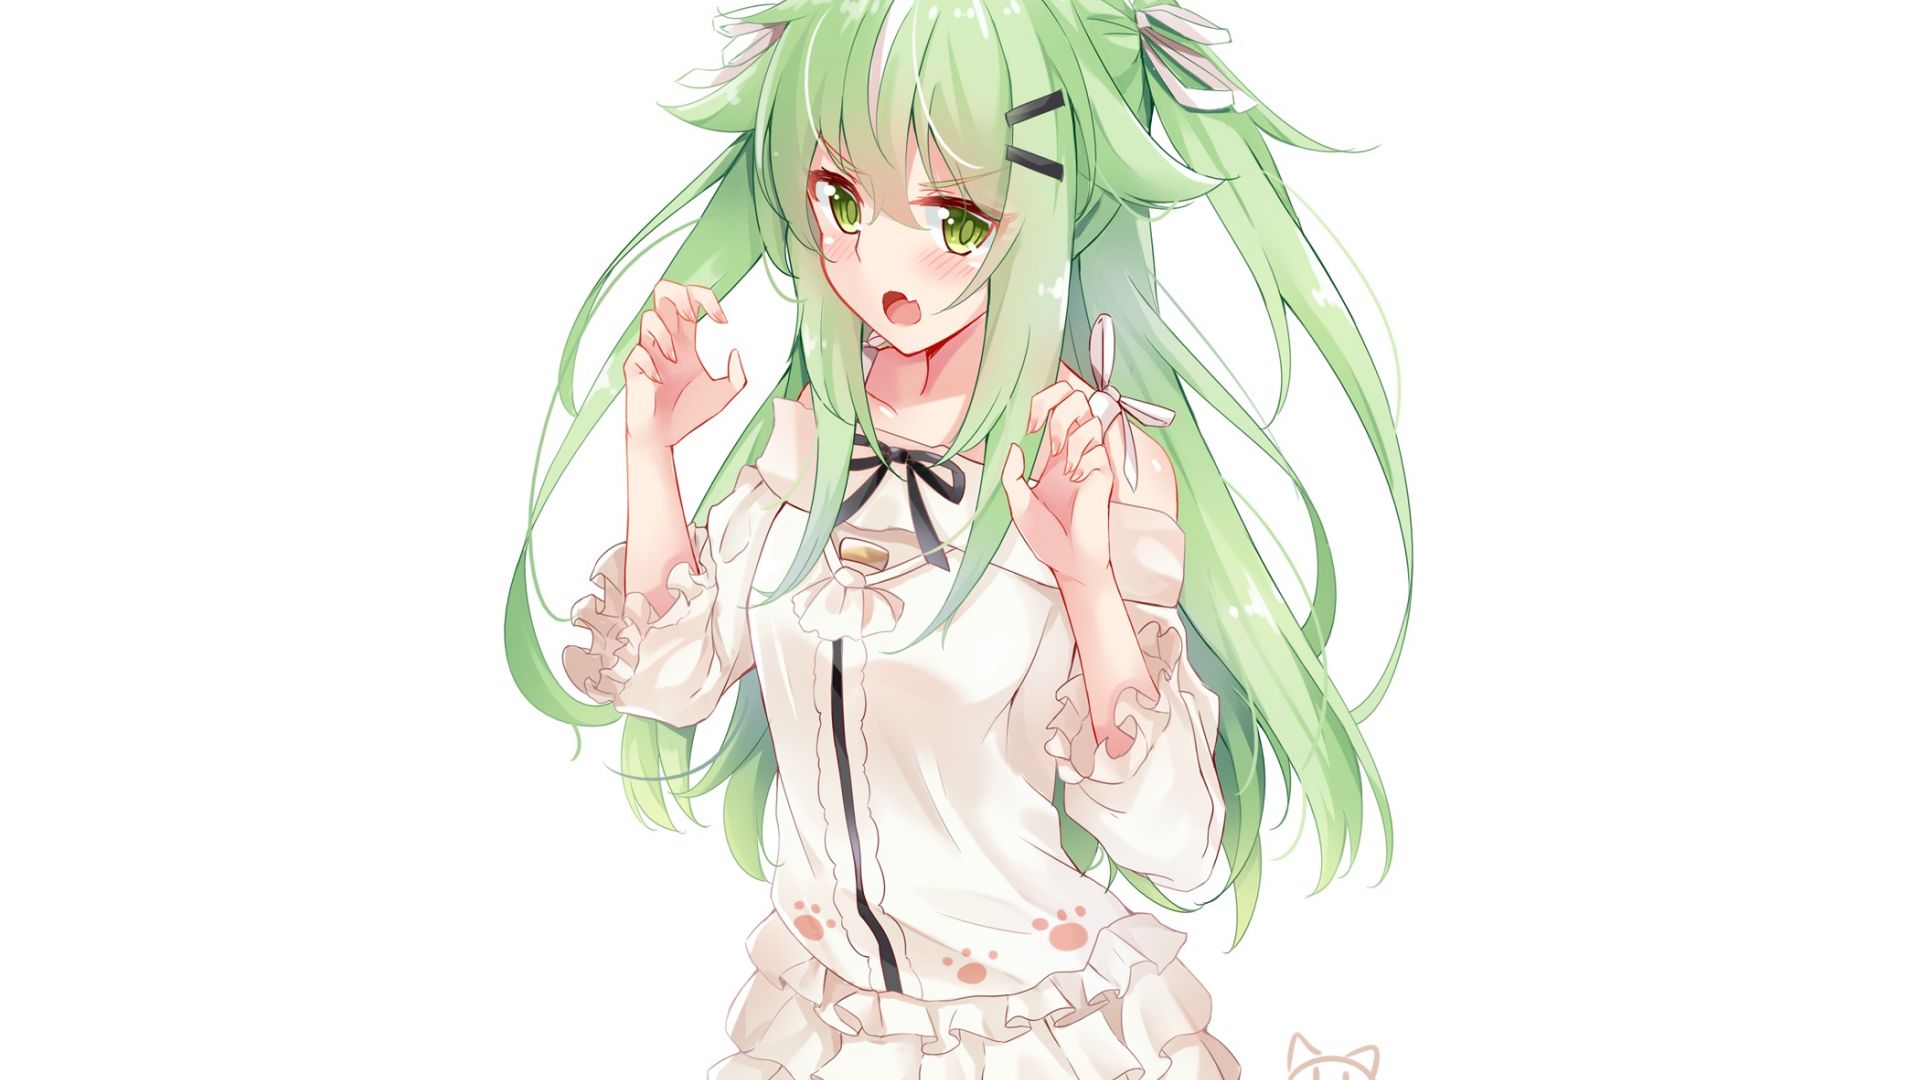 Desktop Wallpaper Cute, Green Hair Anime Girl, Original, Minimal, HD Image, Picture, Background, A8ee99